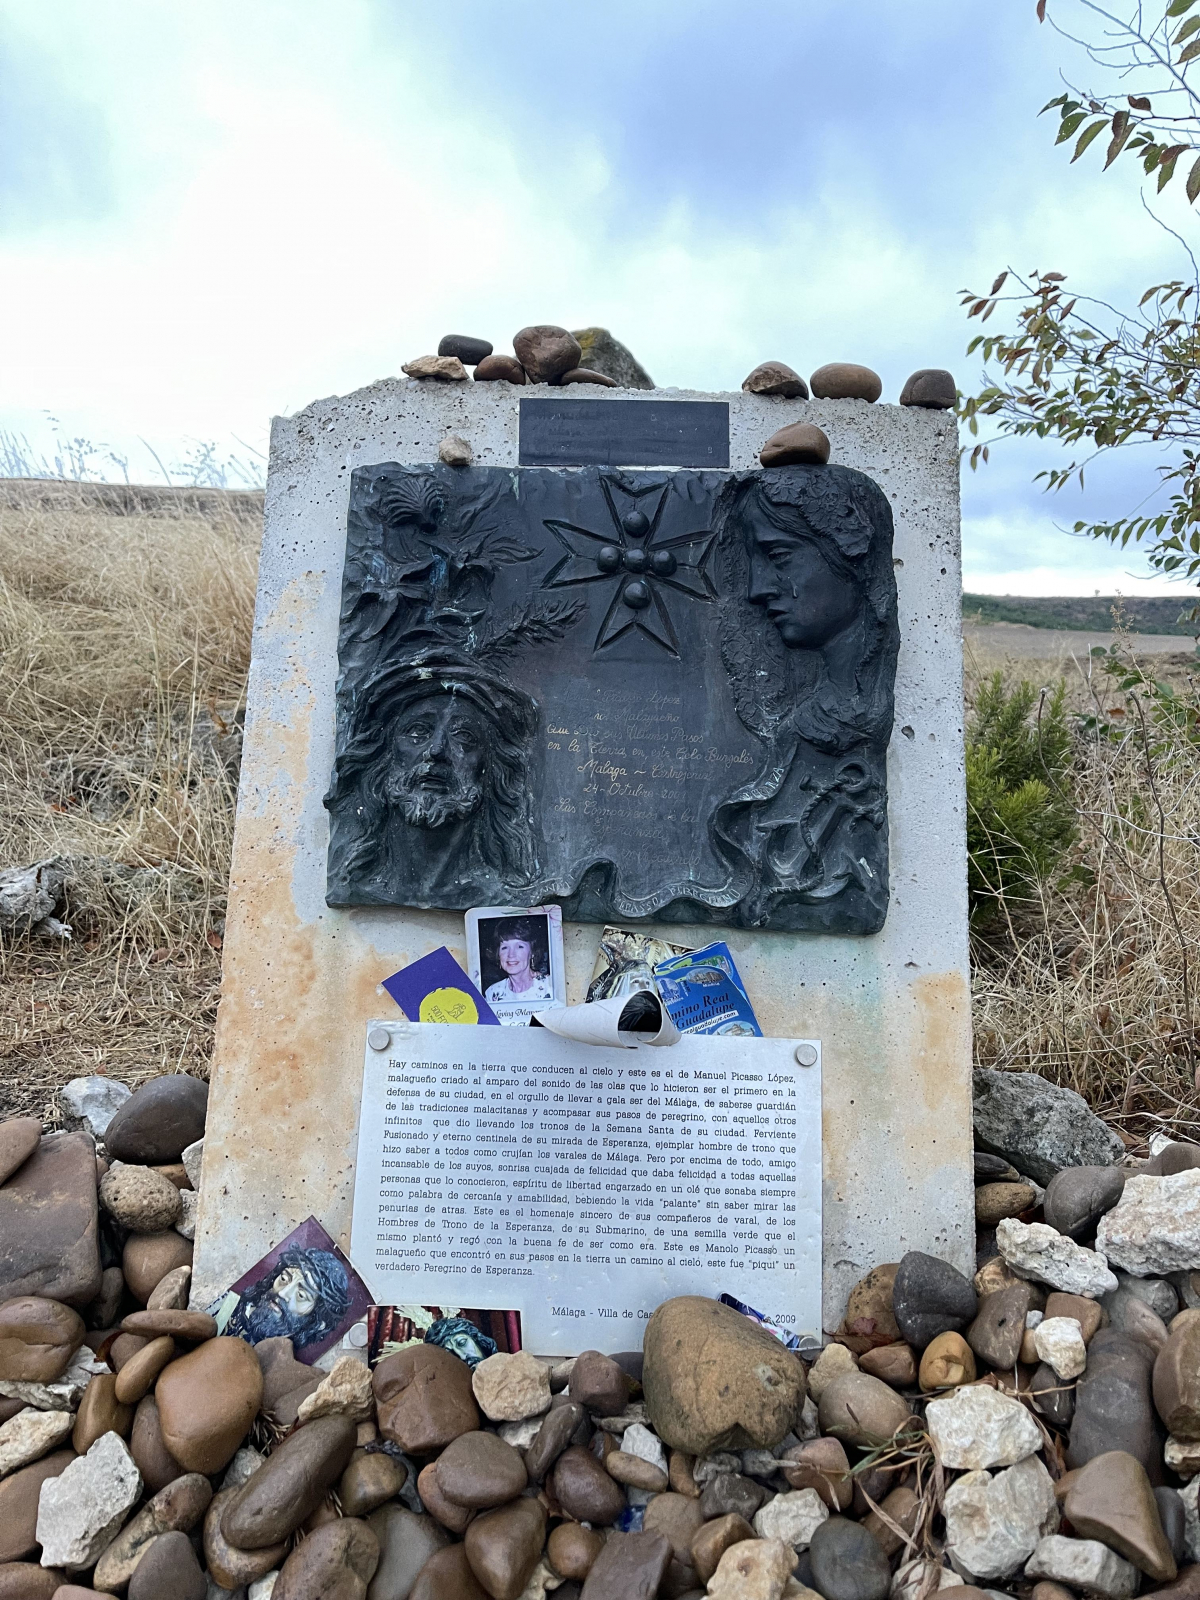 Picture of a memorial shrine on the Camino de Santiago